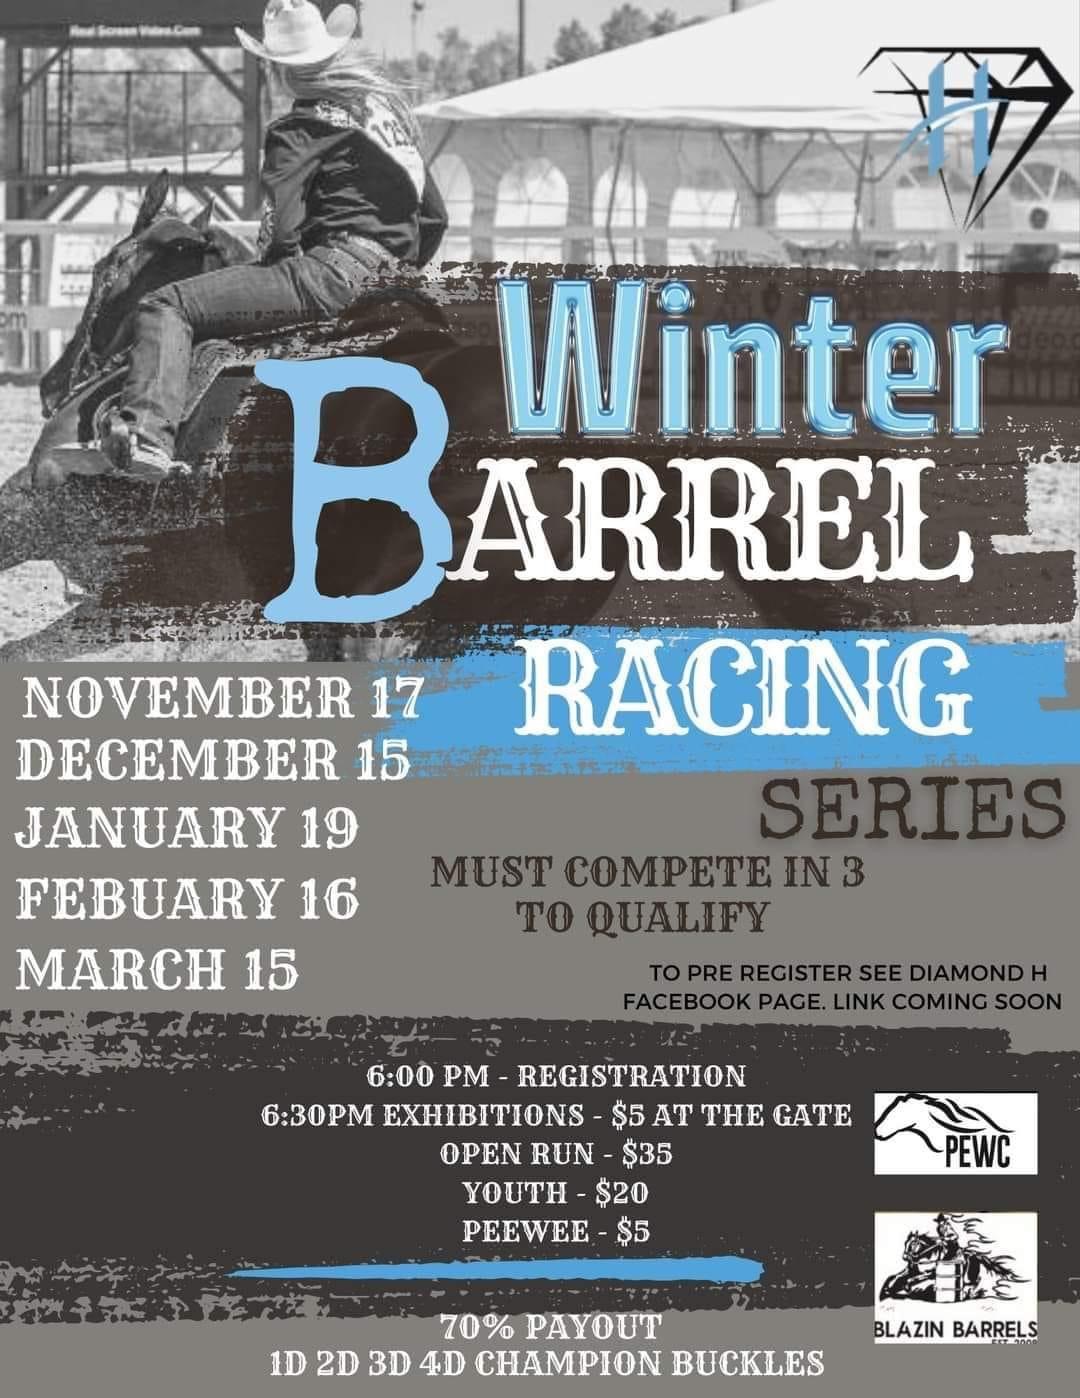 Winter barrel racing series 